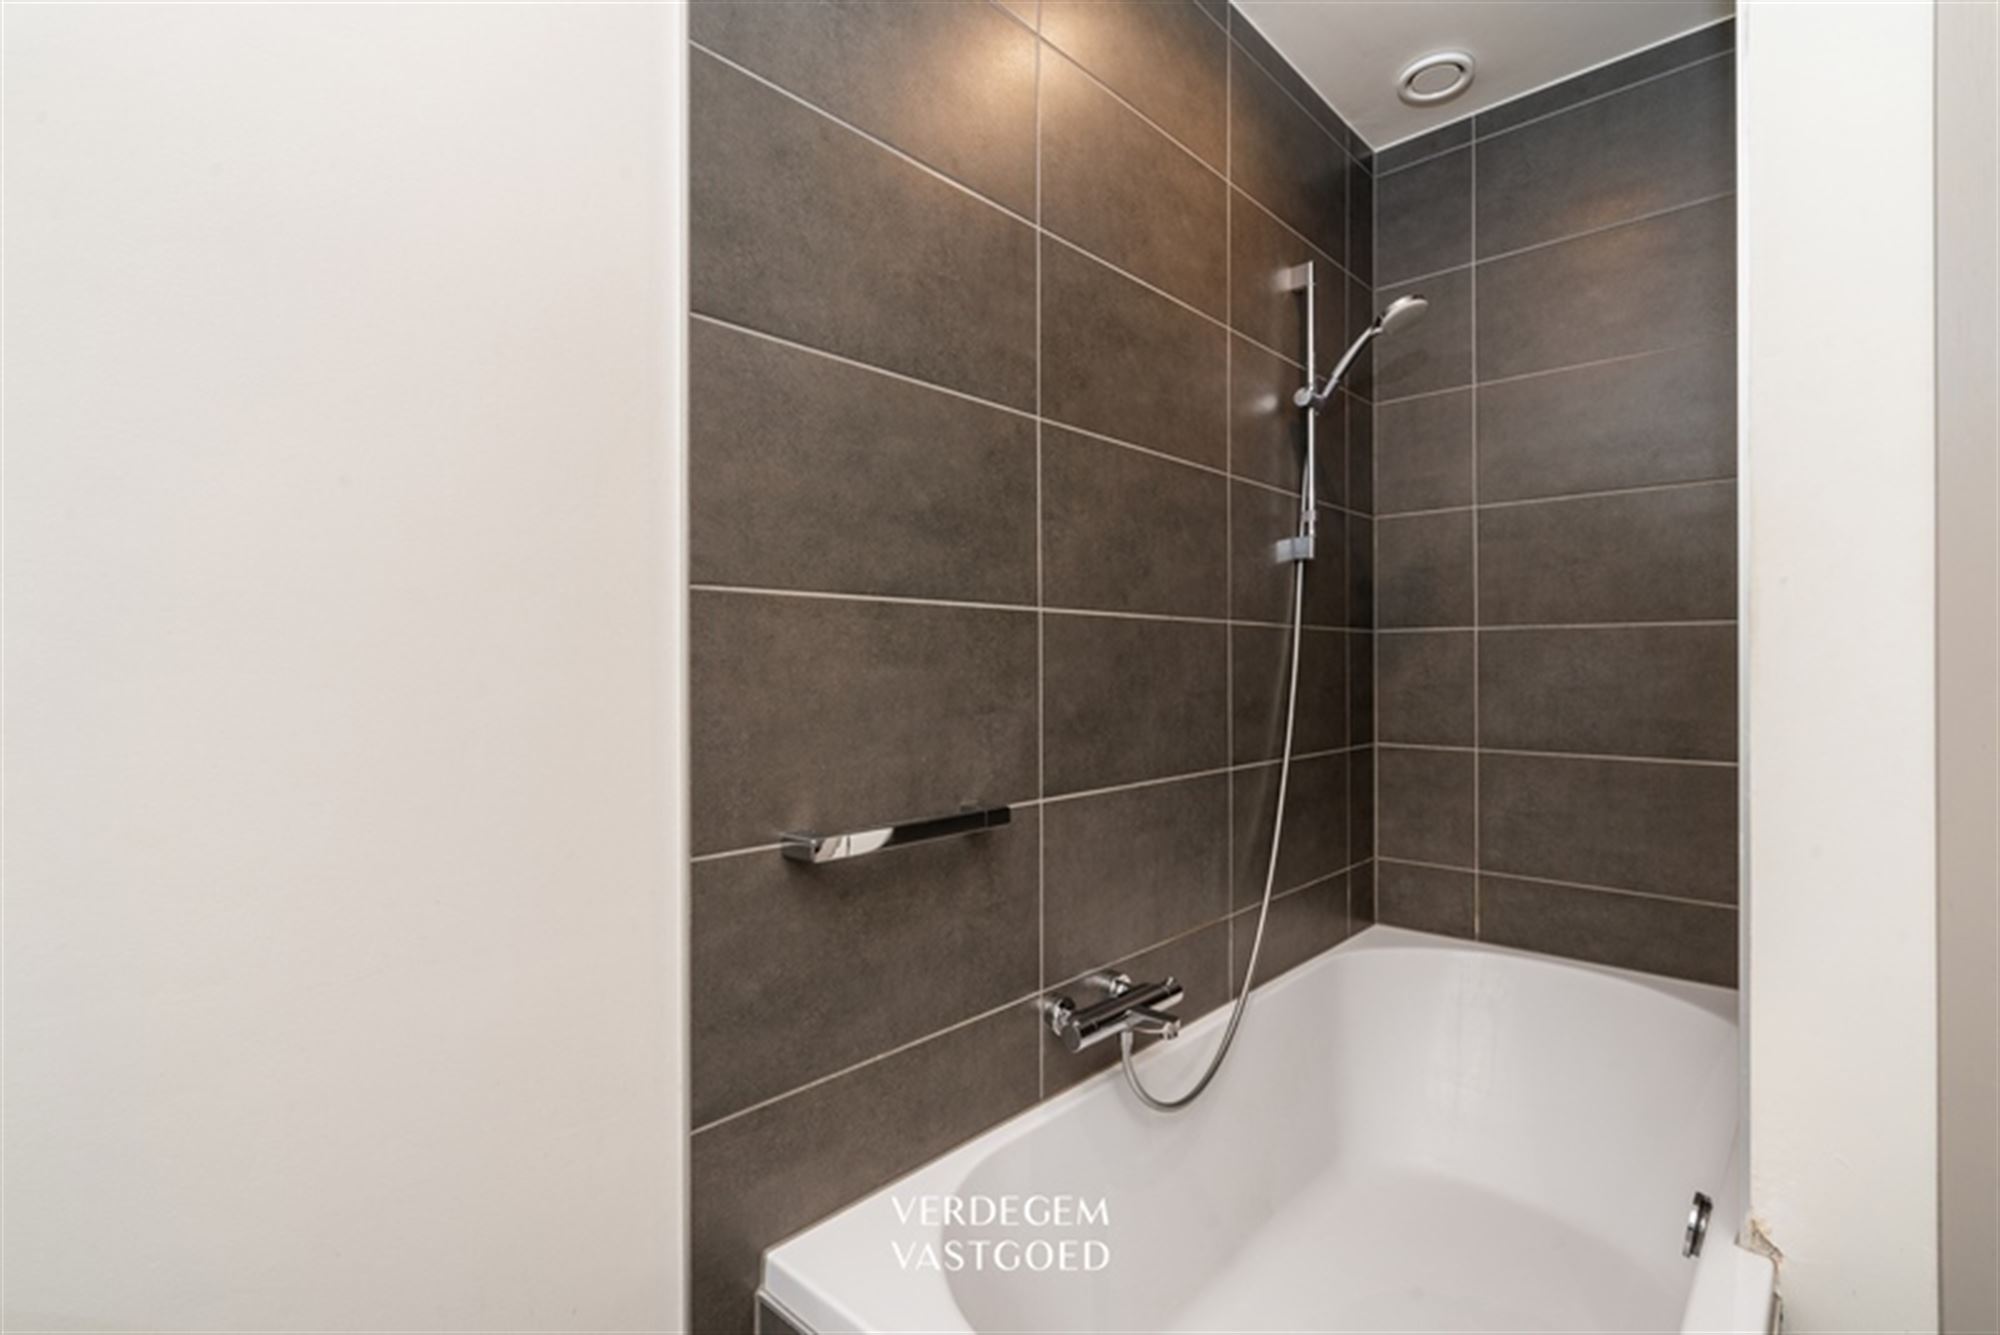 Comfort en kwaliteit: appartement met Bulthaup keuken en warmtepomp met geothermie foto 10